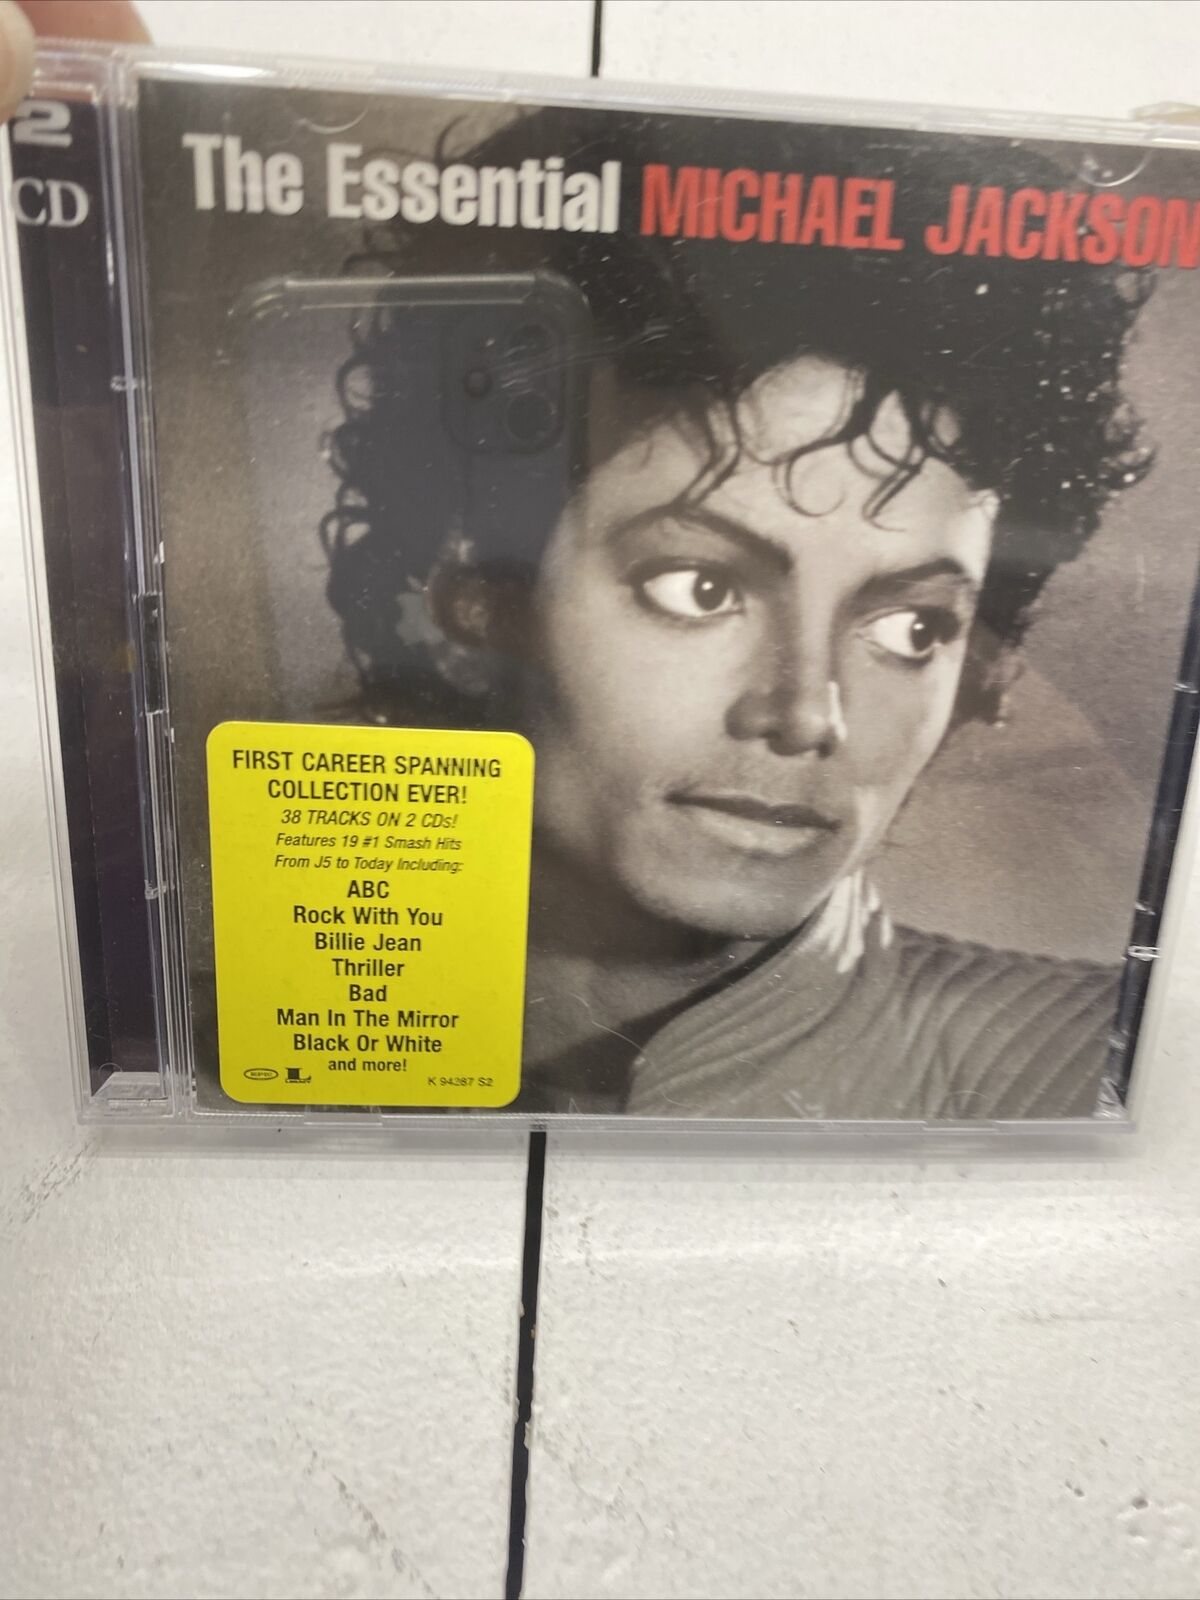 MICHAEL JACKSON THE ESSENTIAL MICHAEL JACKSON CD - beyond exchange